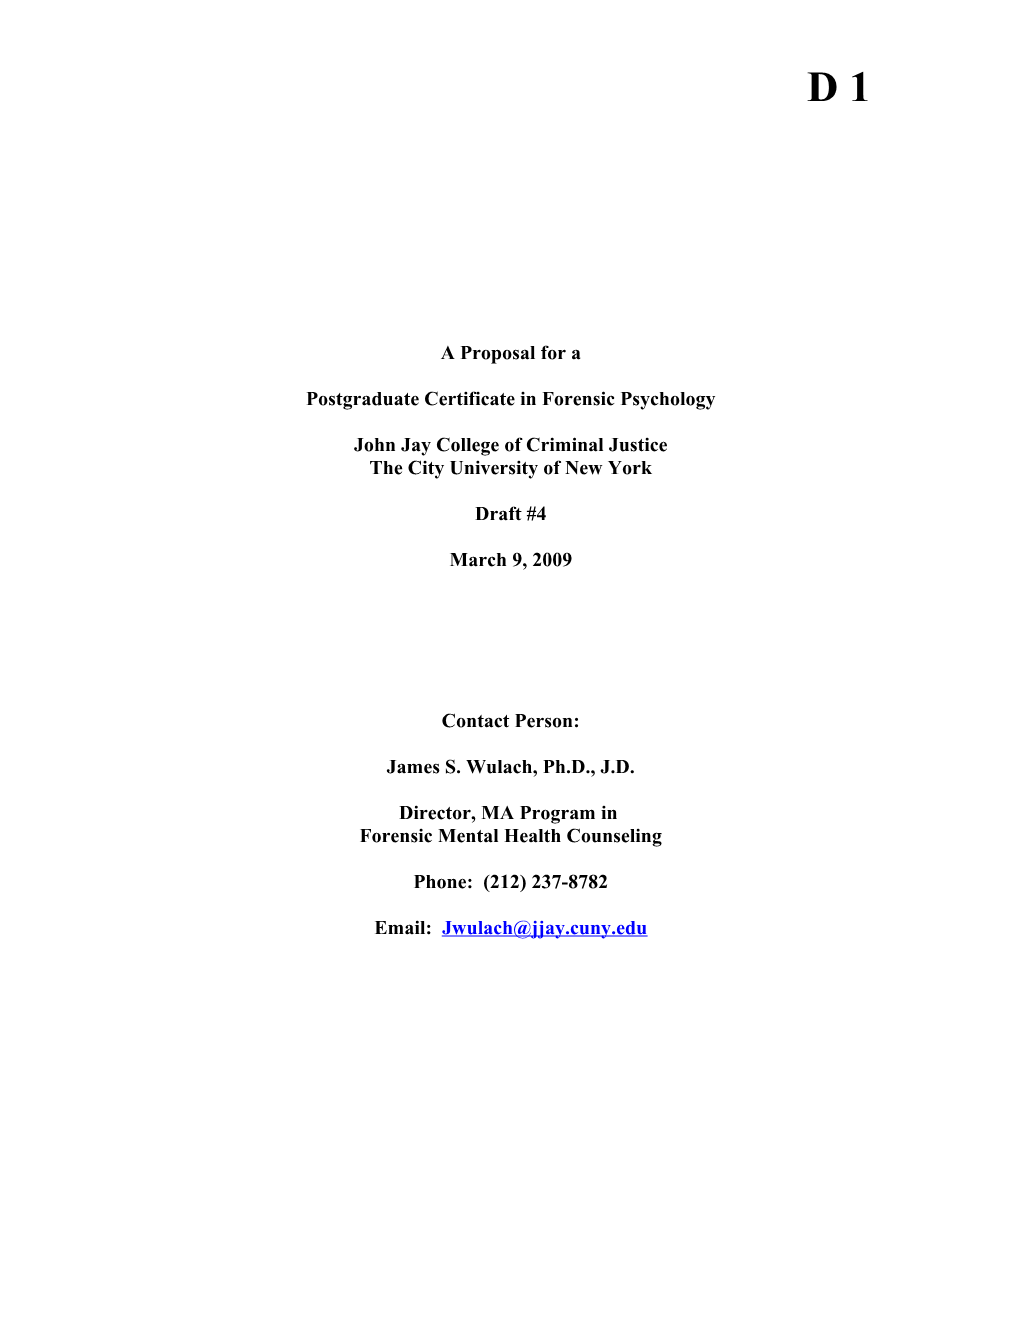 Postgraduate Certificate in Forensic Psychology